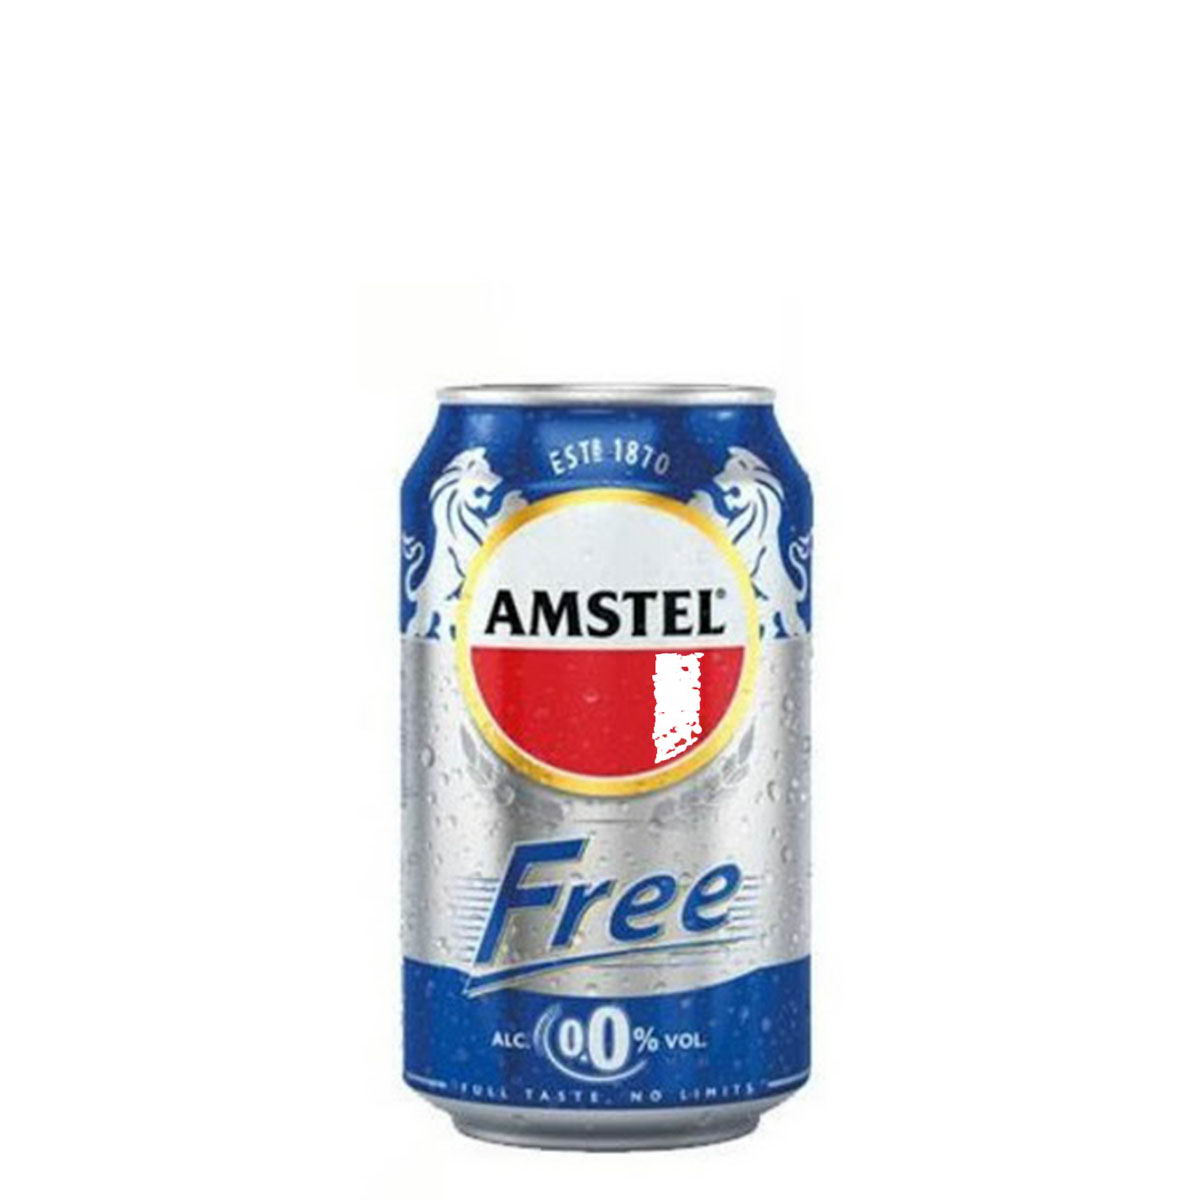 Amstel free 330ml